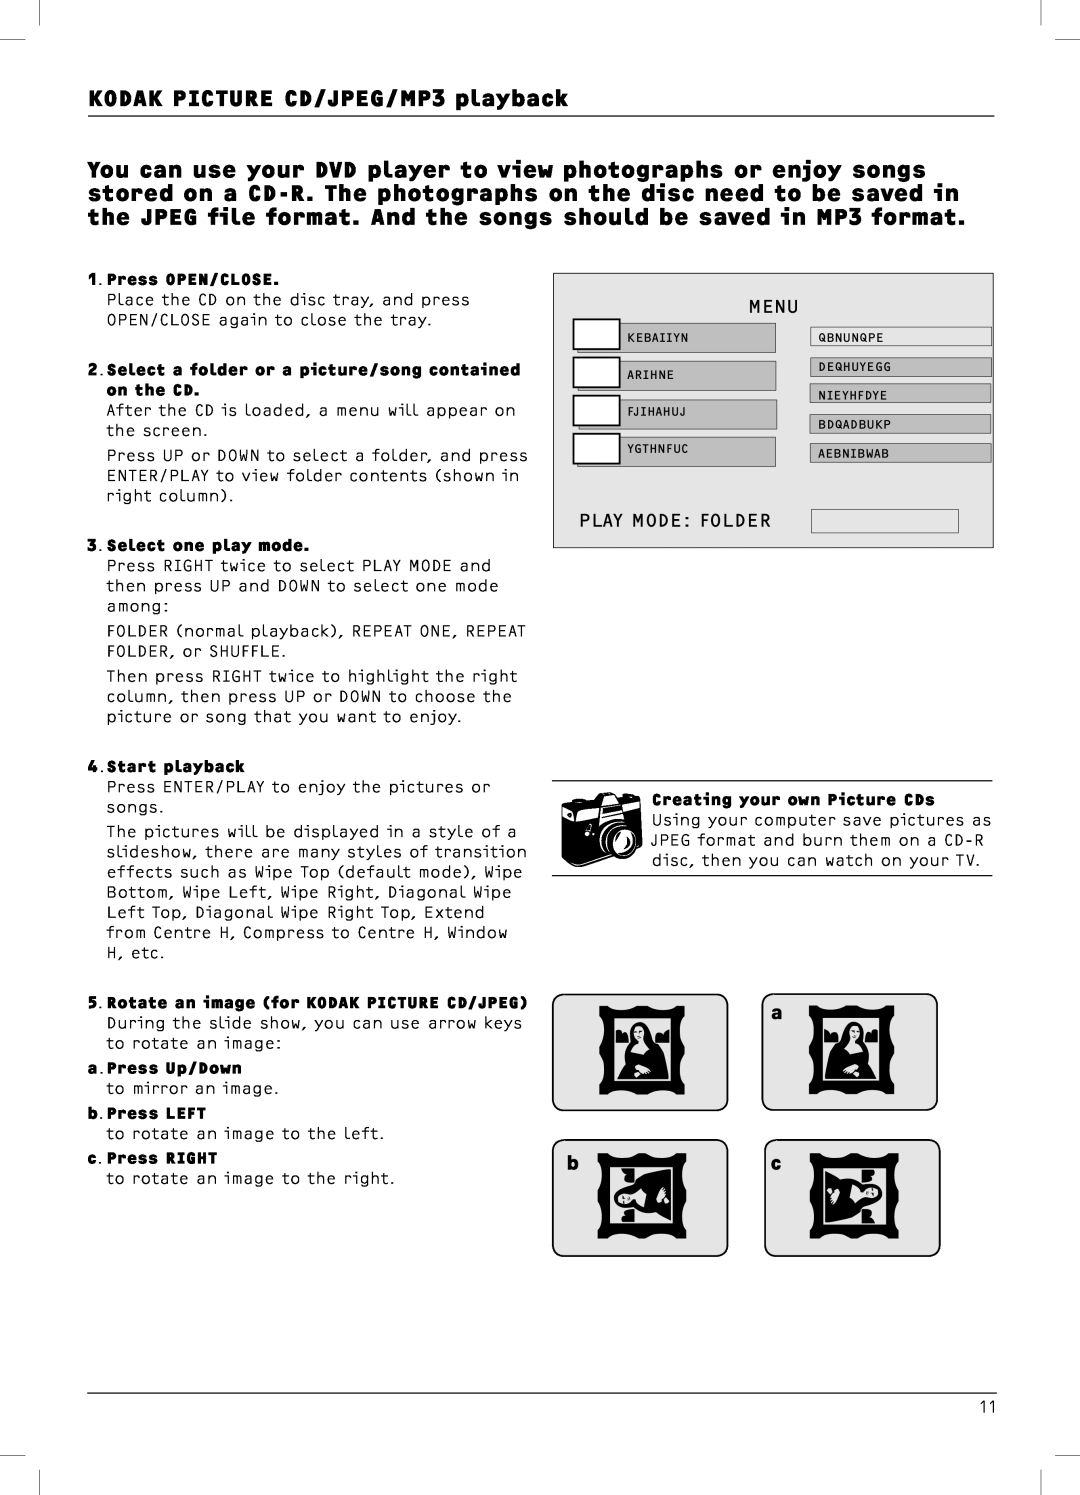 Dolby Laboratories DX4 manual KODAK PICTURE CD/JPEG/MP3 playback, a bc, Menu, Play Mode Folder 